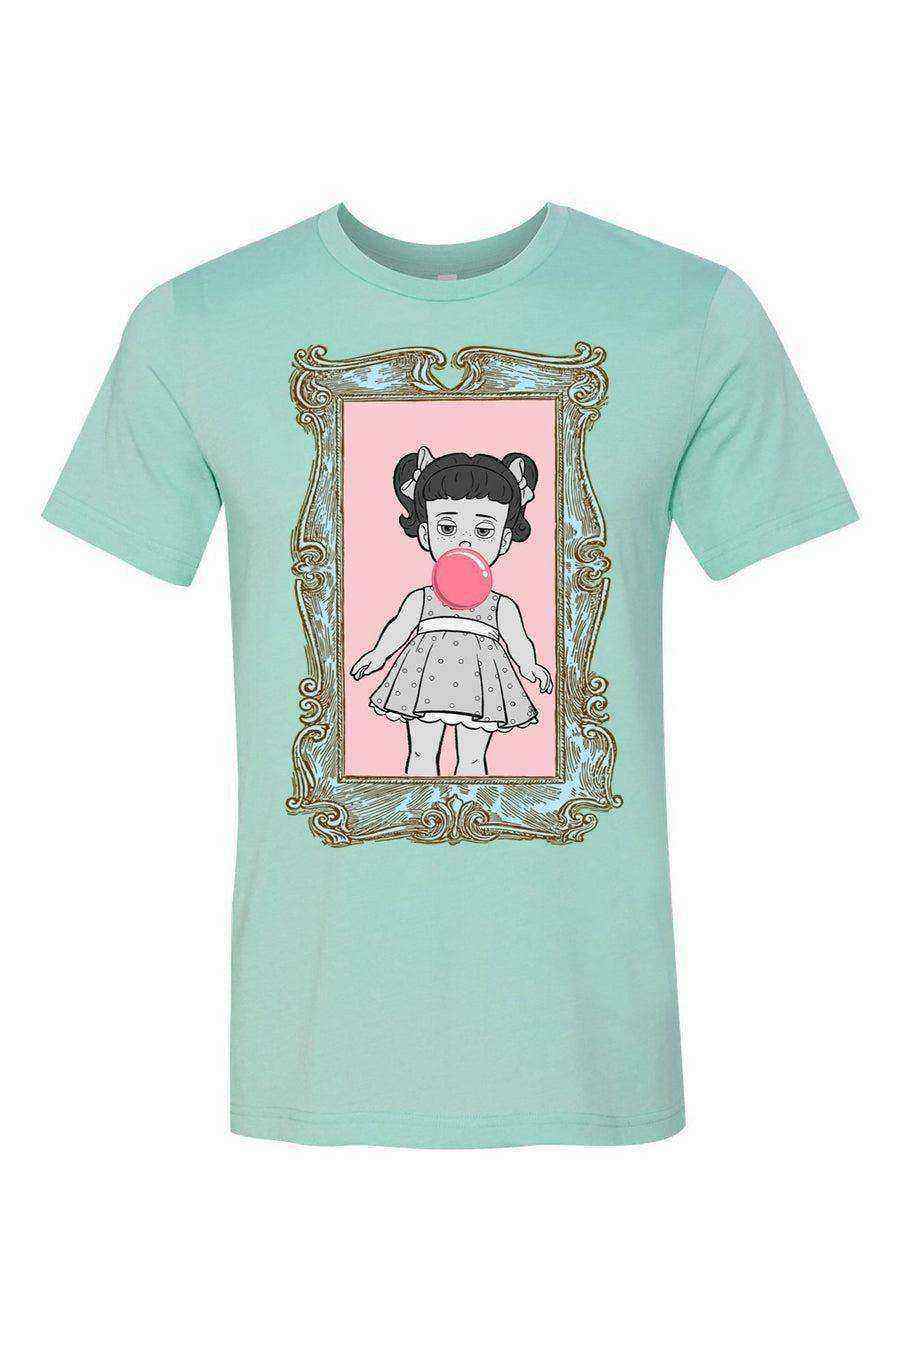 Youth | Gabby Gabby Bubblegum Pop Art Shirt | Gabby Gabby Shirts - Dylan's Tees